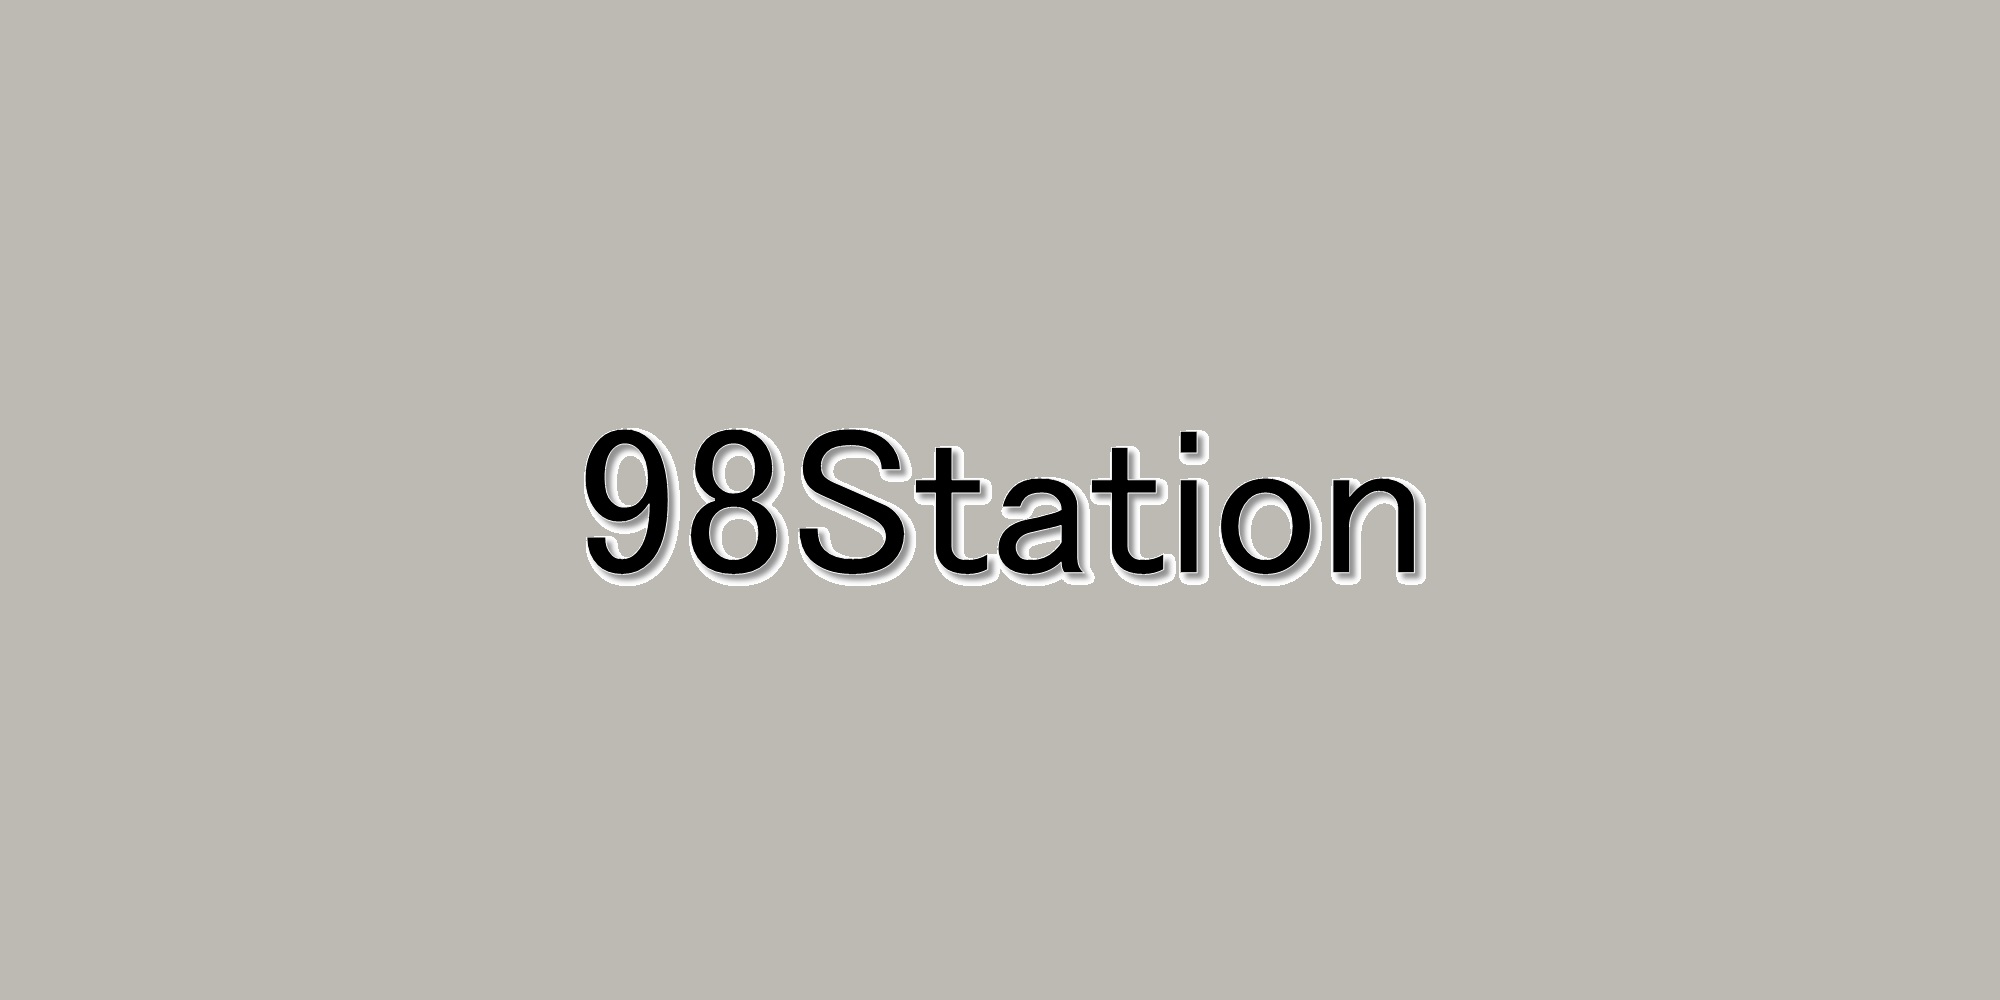 98Station